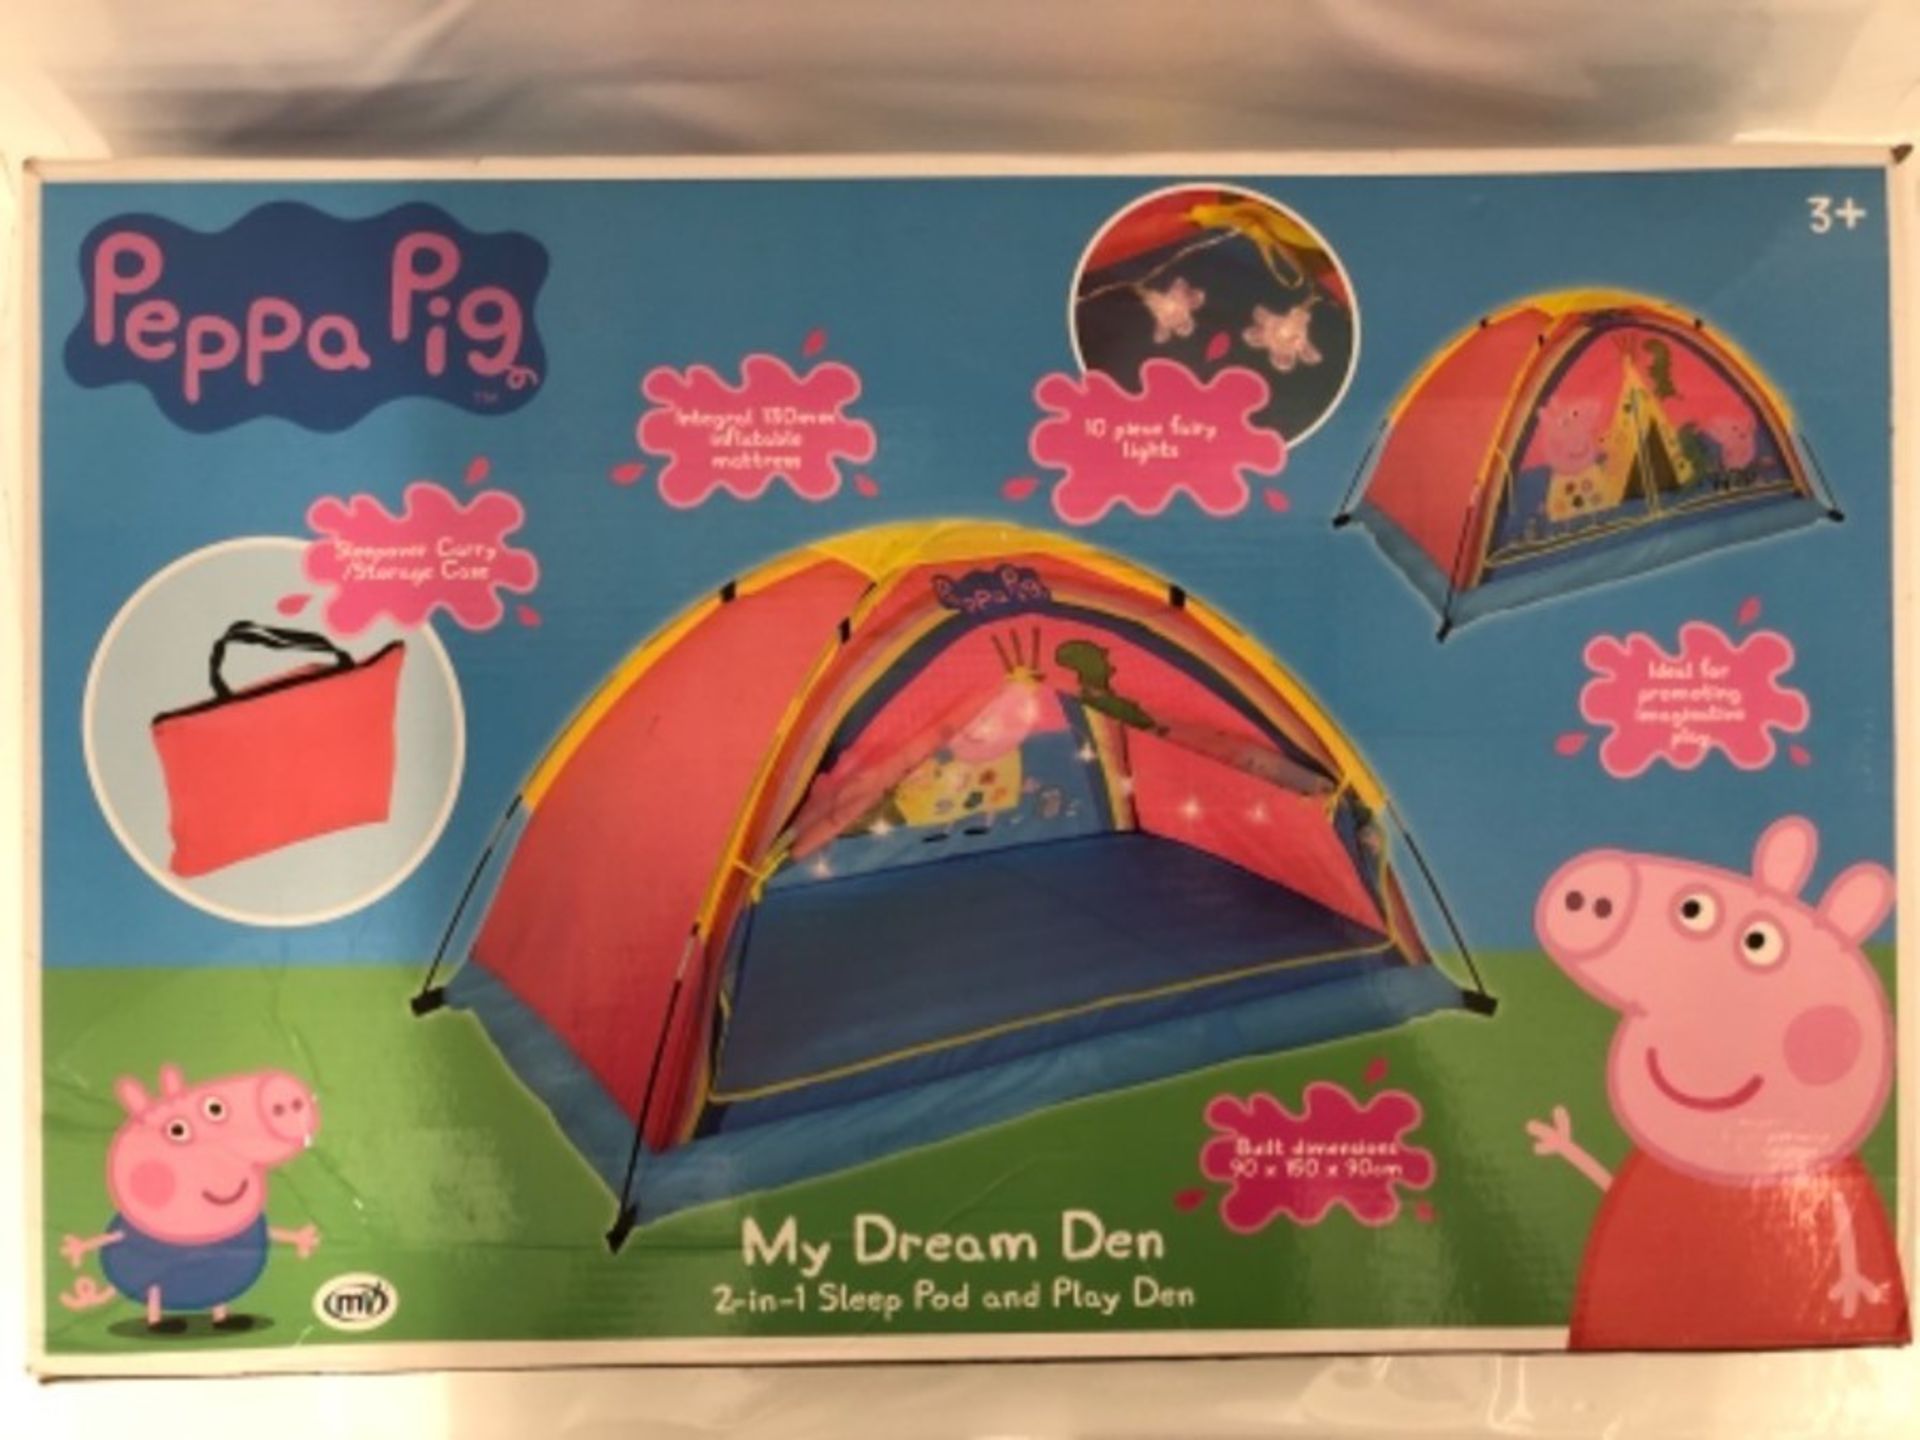 Peppa Pig M009722 Dream Den Tent, Multi - Image 2 of 3